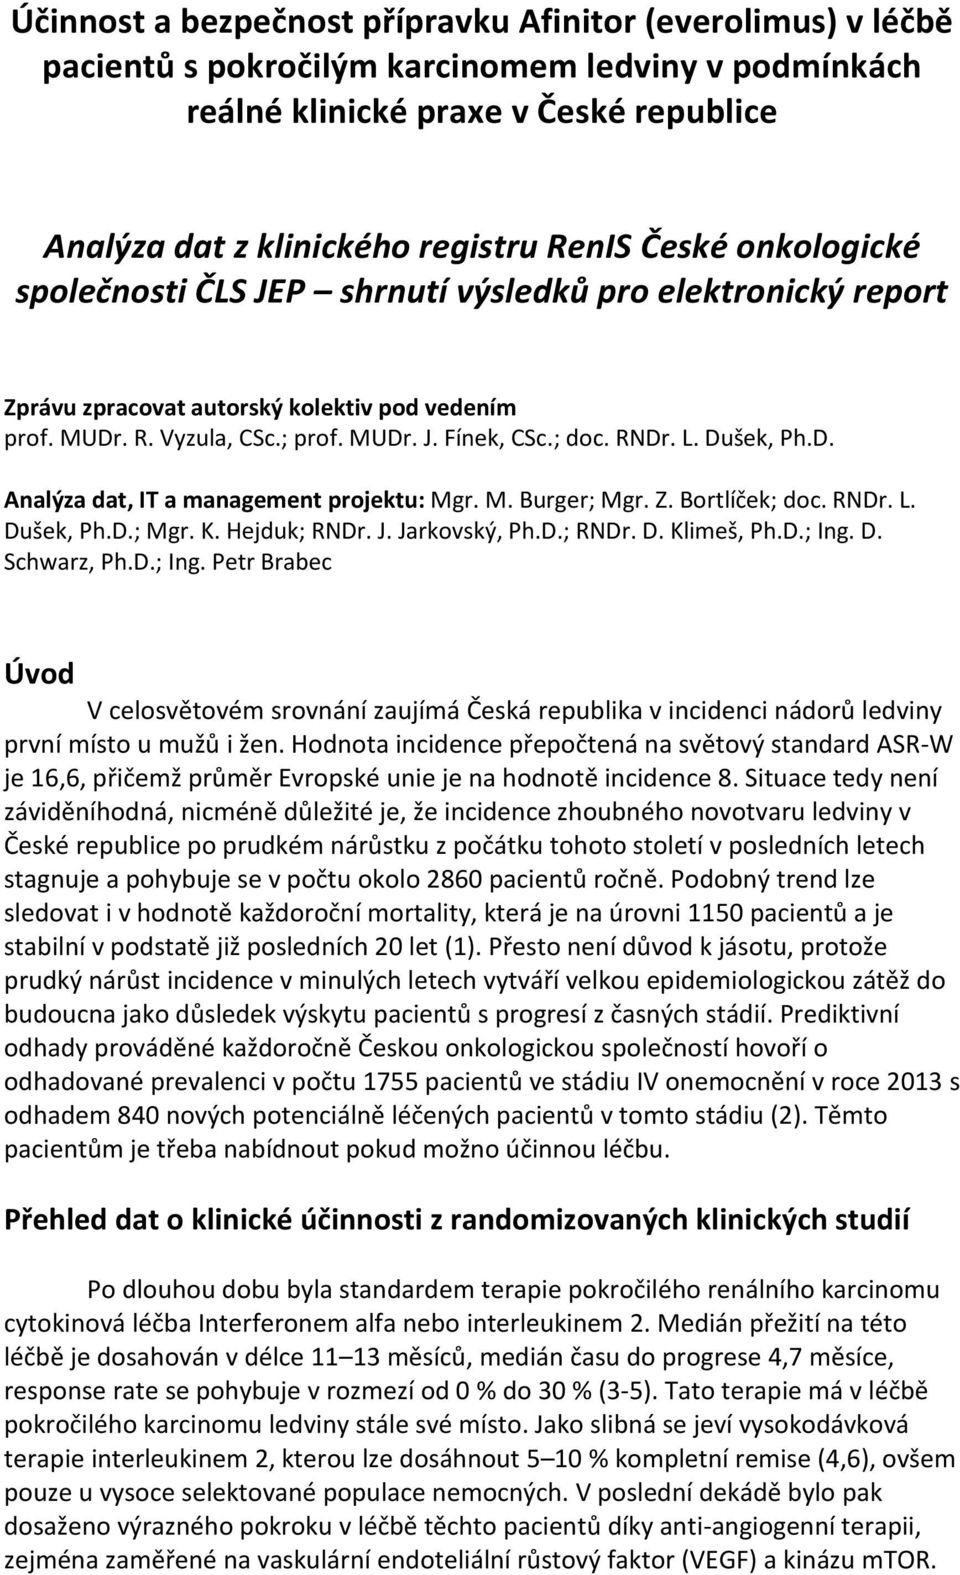 Dušek, Ph.D. Analýza dat, IT a management projektu: Mgr. M. Burger; Mgr. Z. Bortlíček; doc. RNDr. L. Dušek, Ph.D.; Mgr. K. Hejduk; RNDr. J. Jarkovský, Ph.D.; RNDr. D. Klimeš, Ph.D.; Ing. D. Schwarz, Ph.